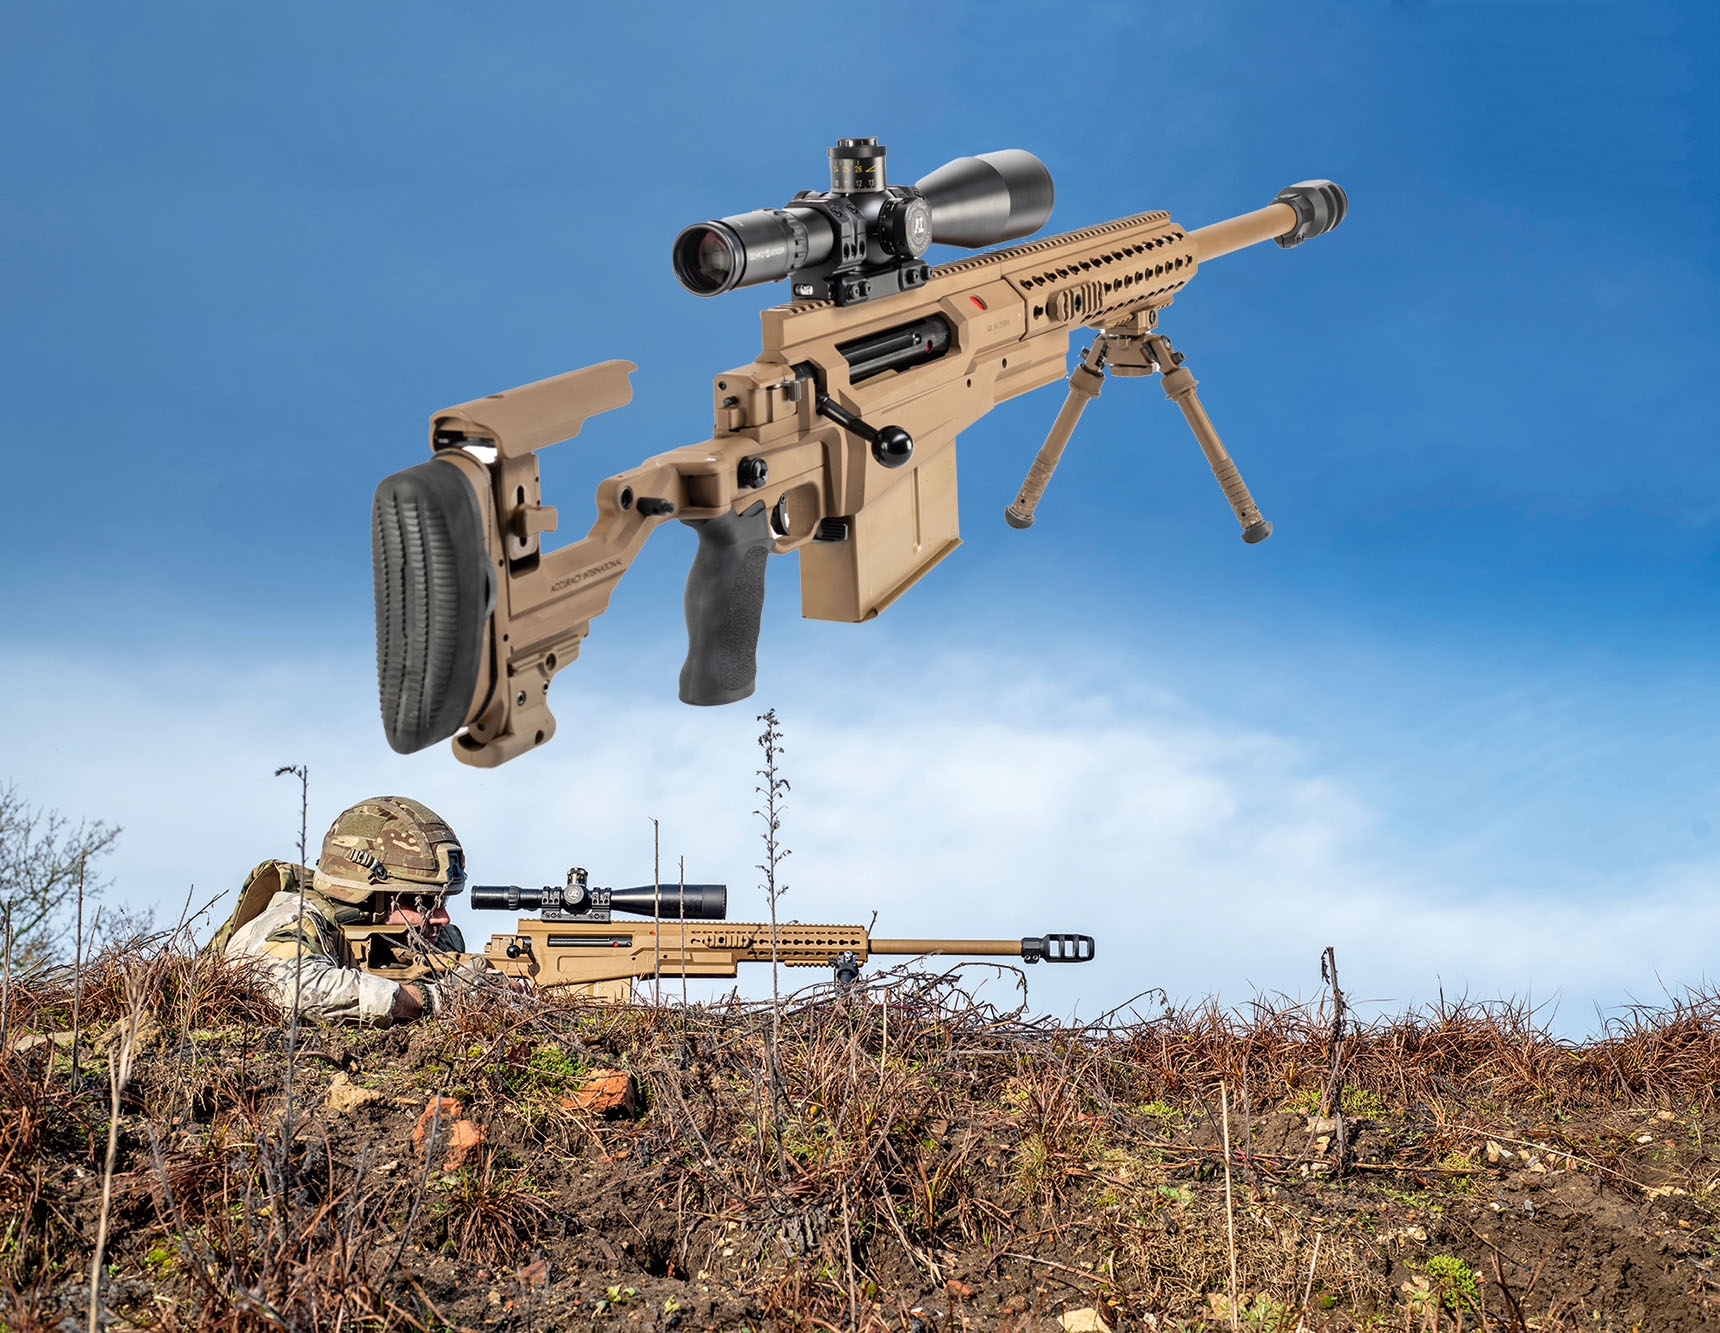 On test: Accuracy International AX50 ELR in .50 BMG, a powerful precision  long range rifle